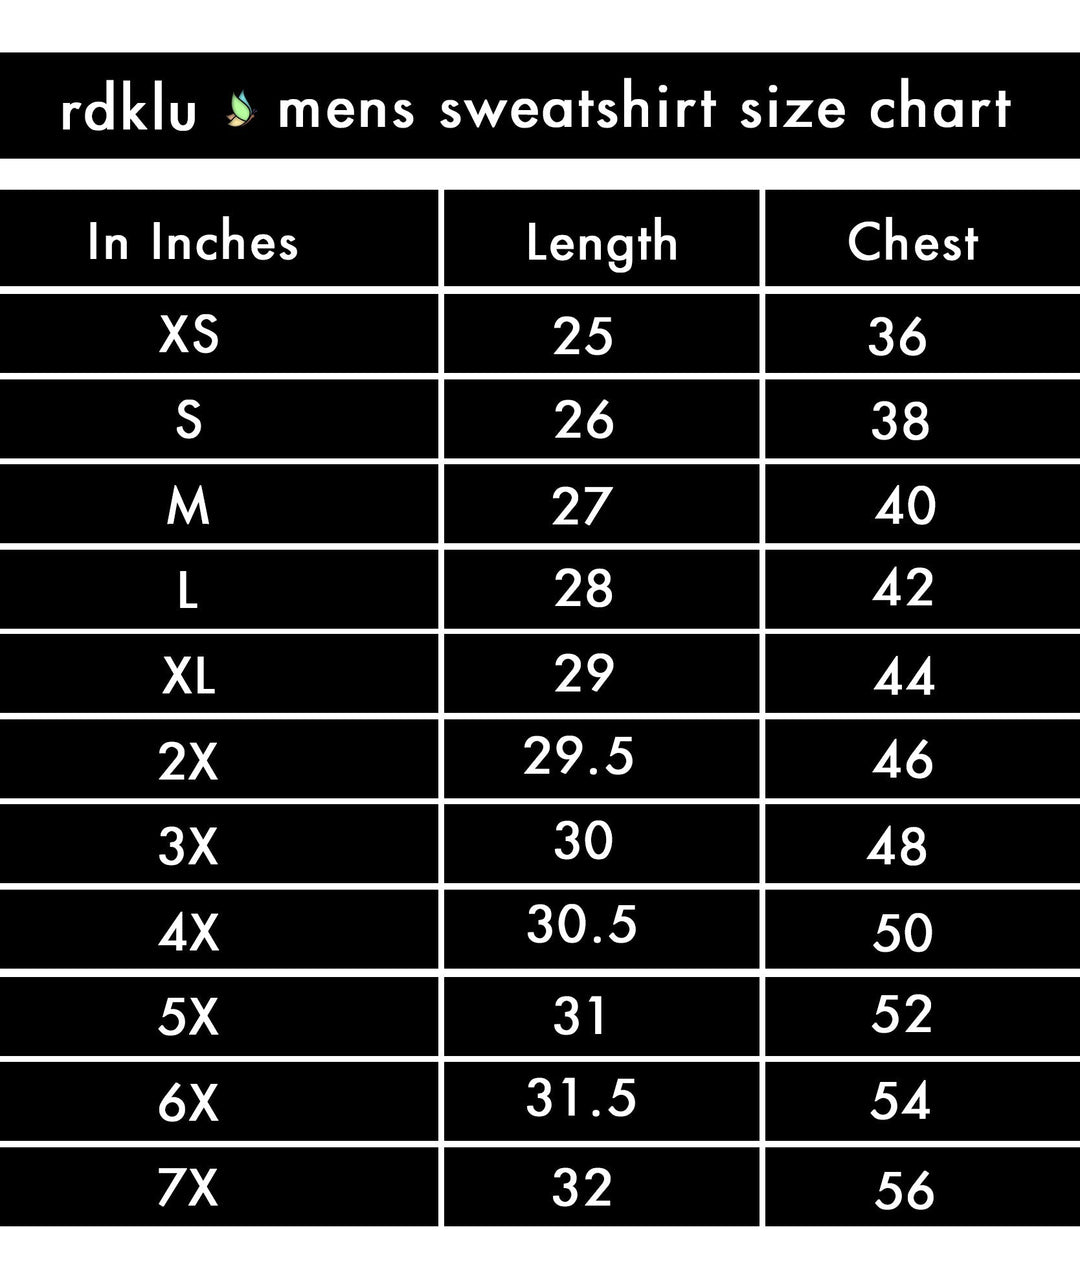 RDKLU MENS SWEATSHIRT - RDKL-Men's Sweatshirt#159